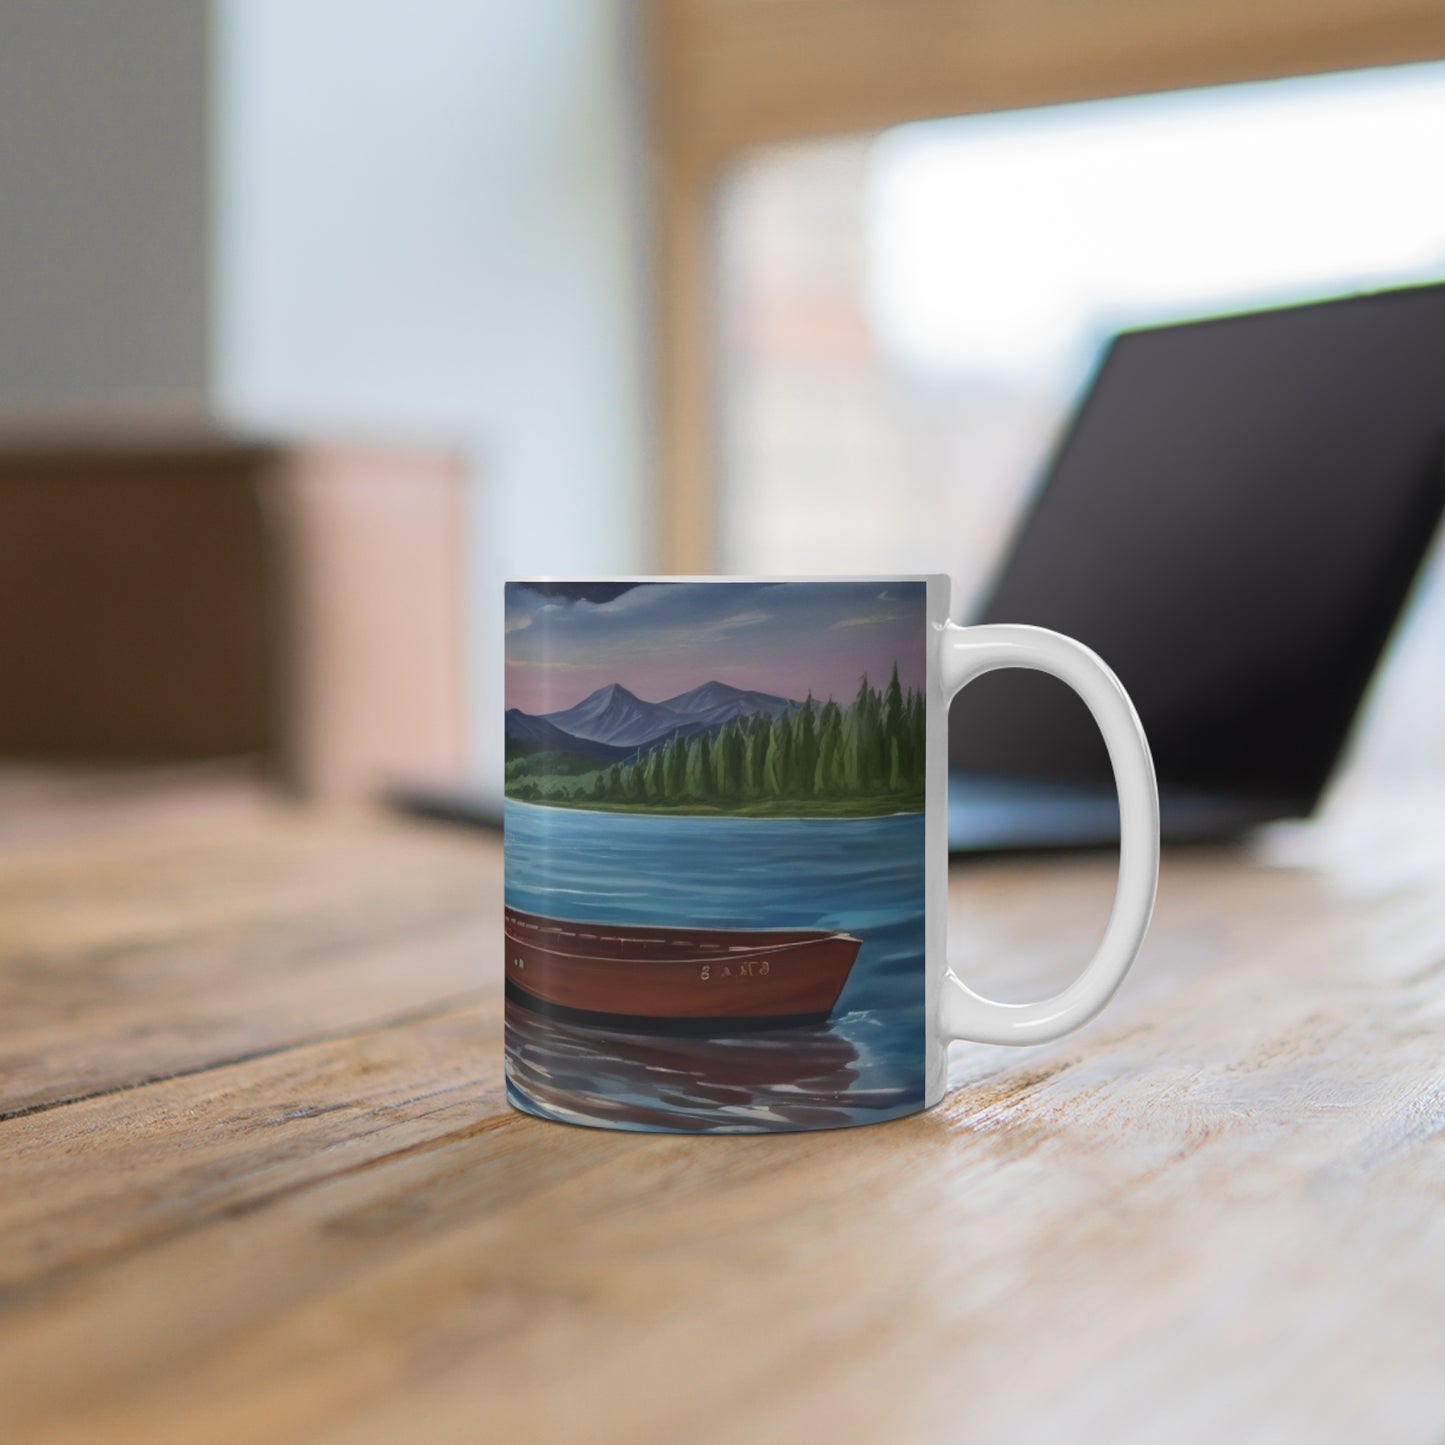 Boat on Lake Mug - Ceramic Coffee Mug 11oz